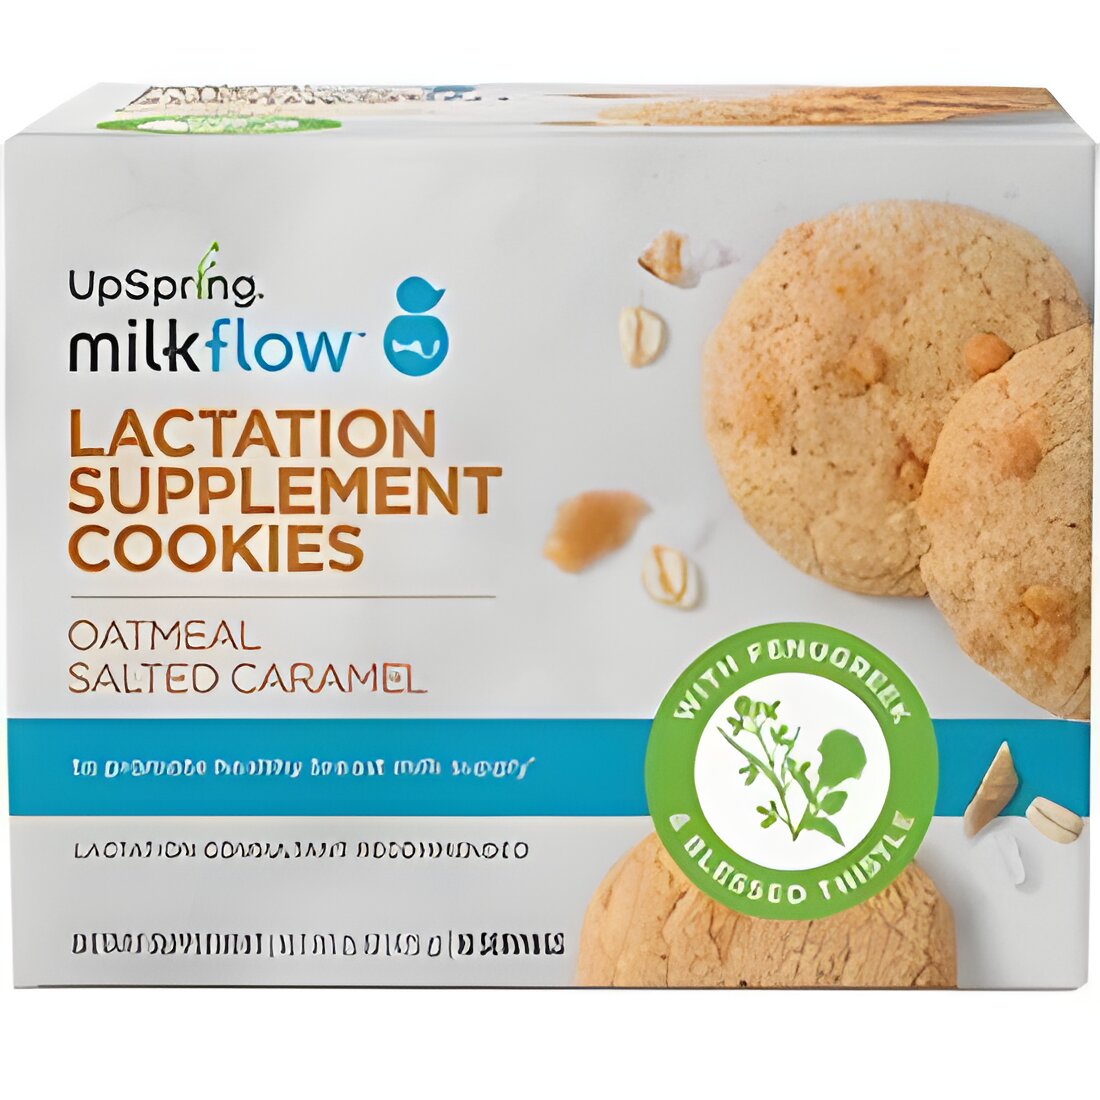 Free Milkflow Fenugreek Oatmeal Salted Caramel Lactation Supplement Cookie